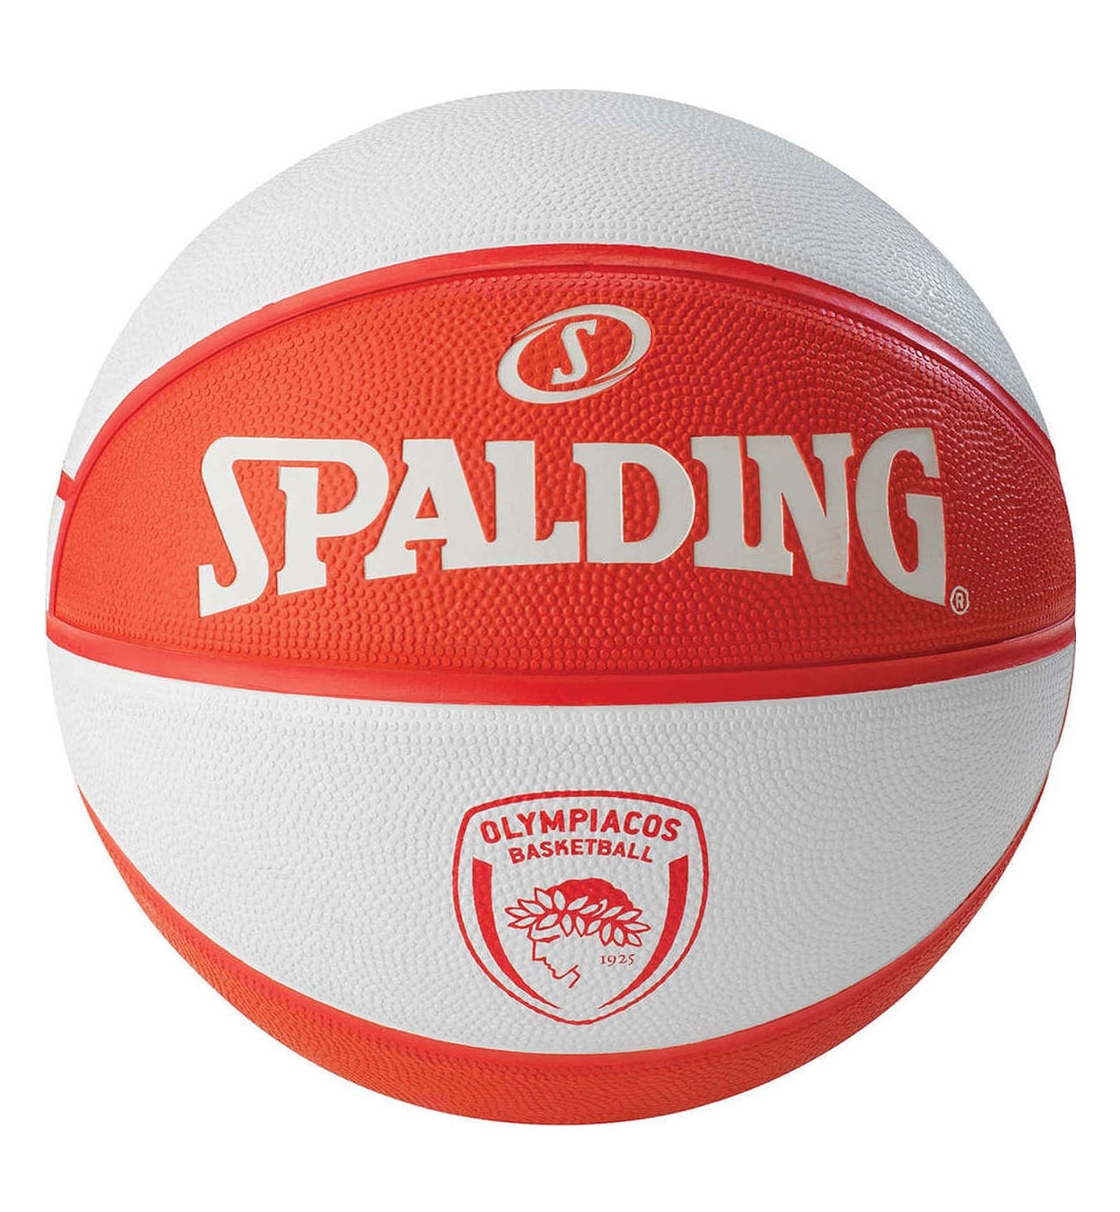 Spalding Fw19 New Olympiakos Piraeus Euroleague Team Rubber-Basketball